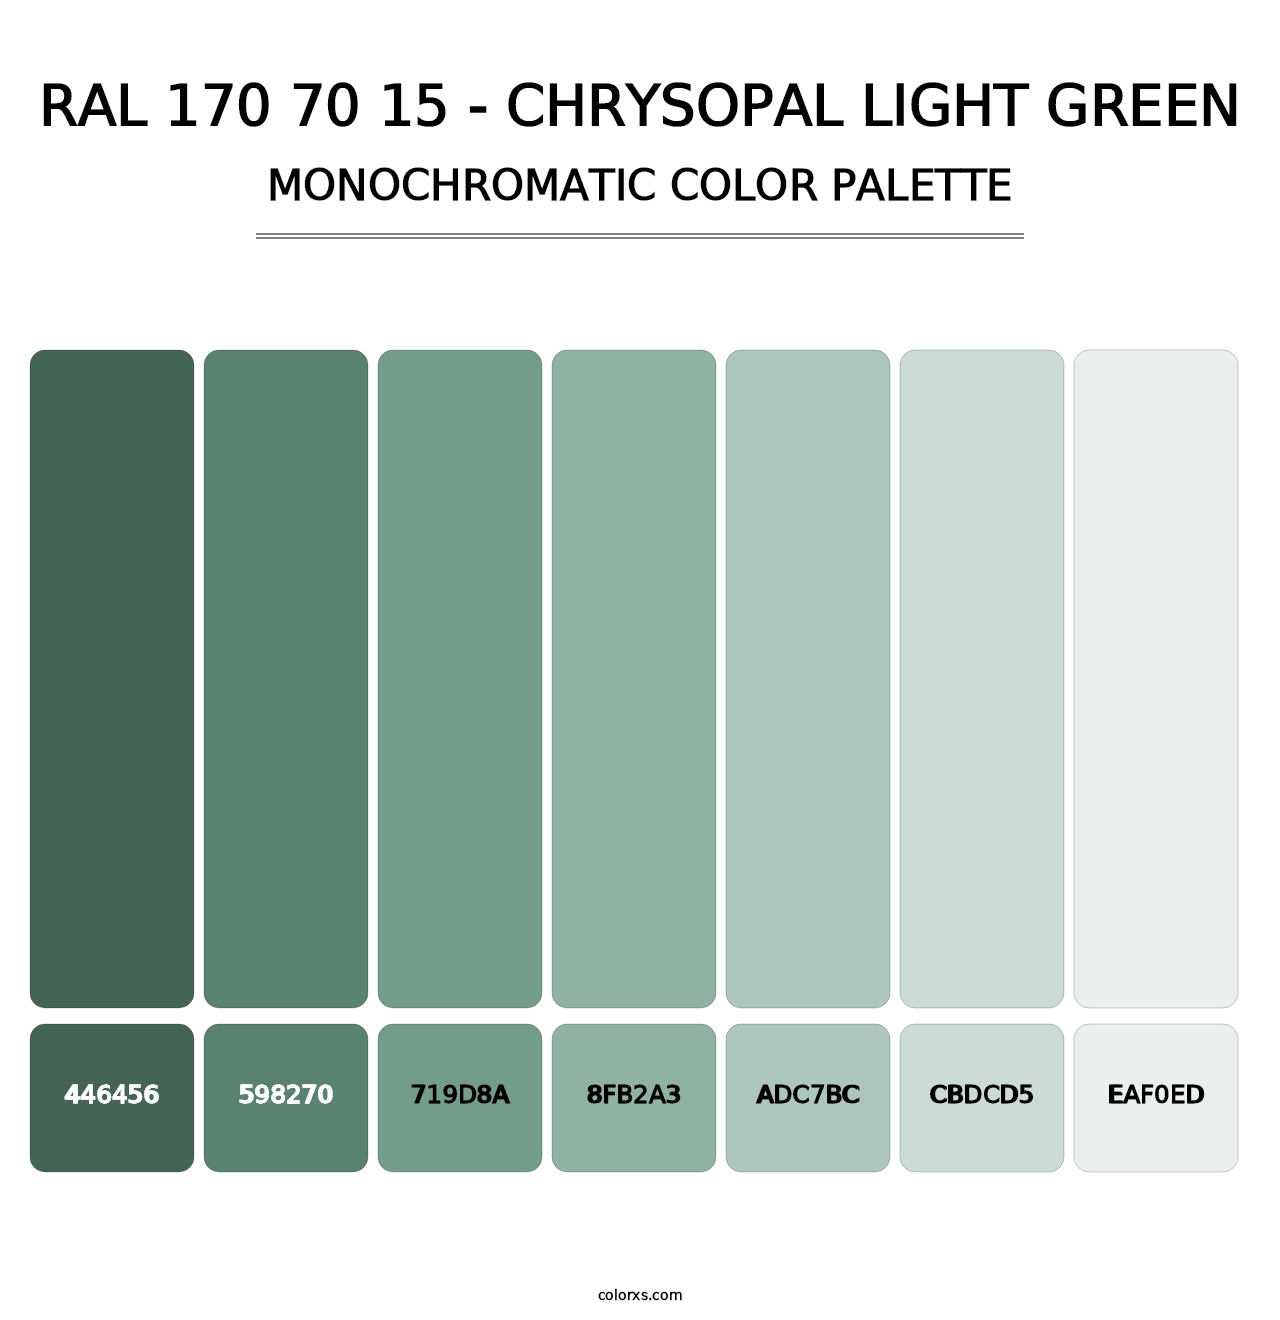 RAL 170 70 15 - Chrysopal Light Green - Monochromatic Color Palette